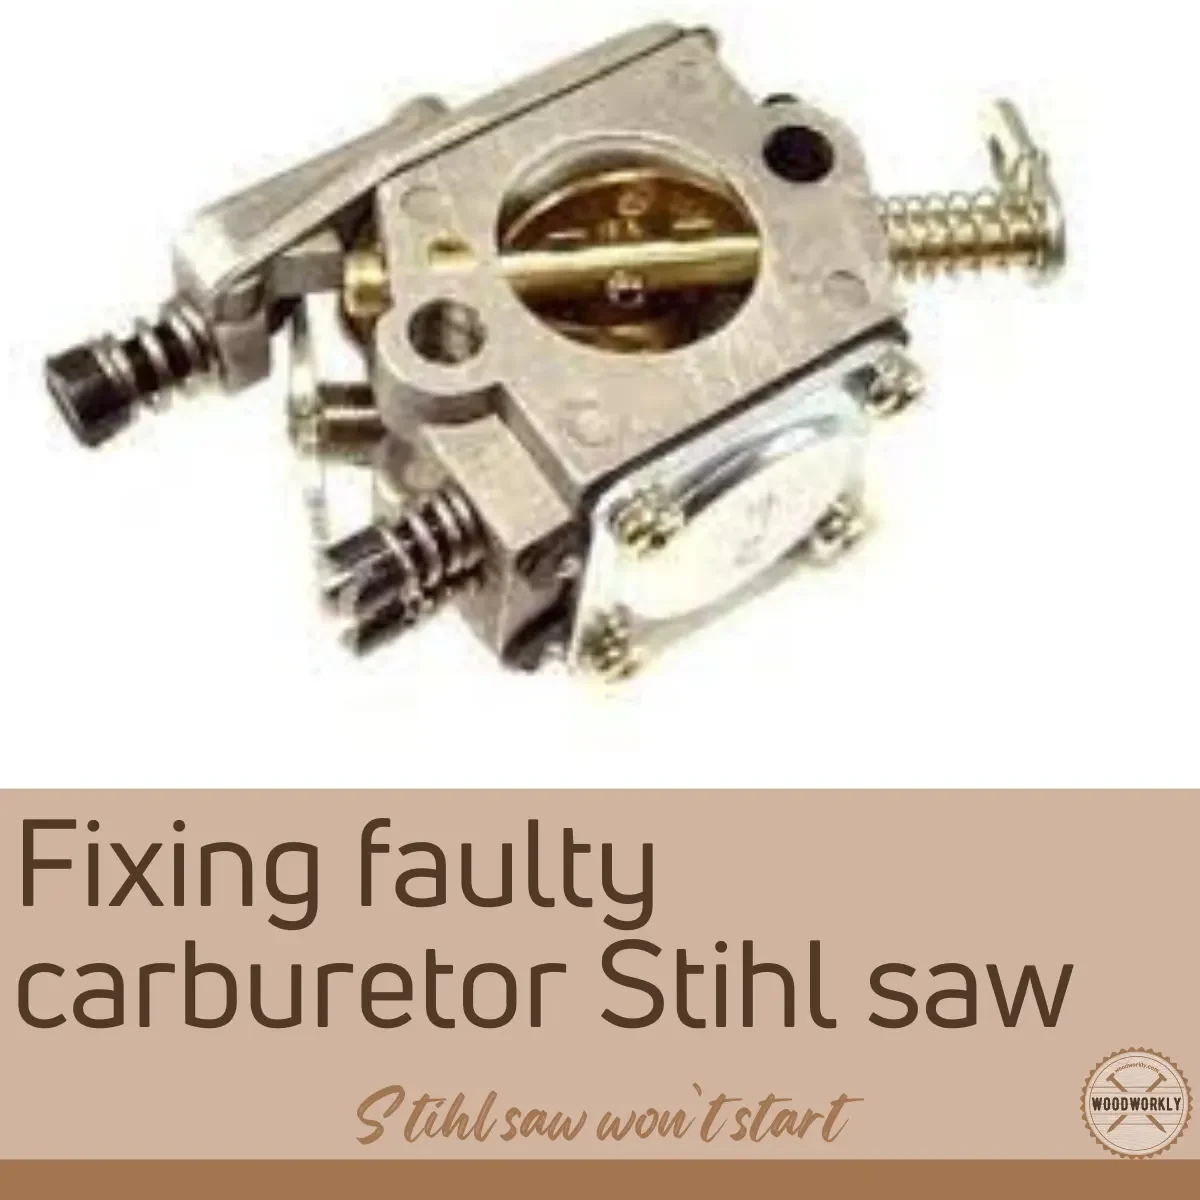 Fixing faulty carburetor Stihl saw